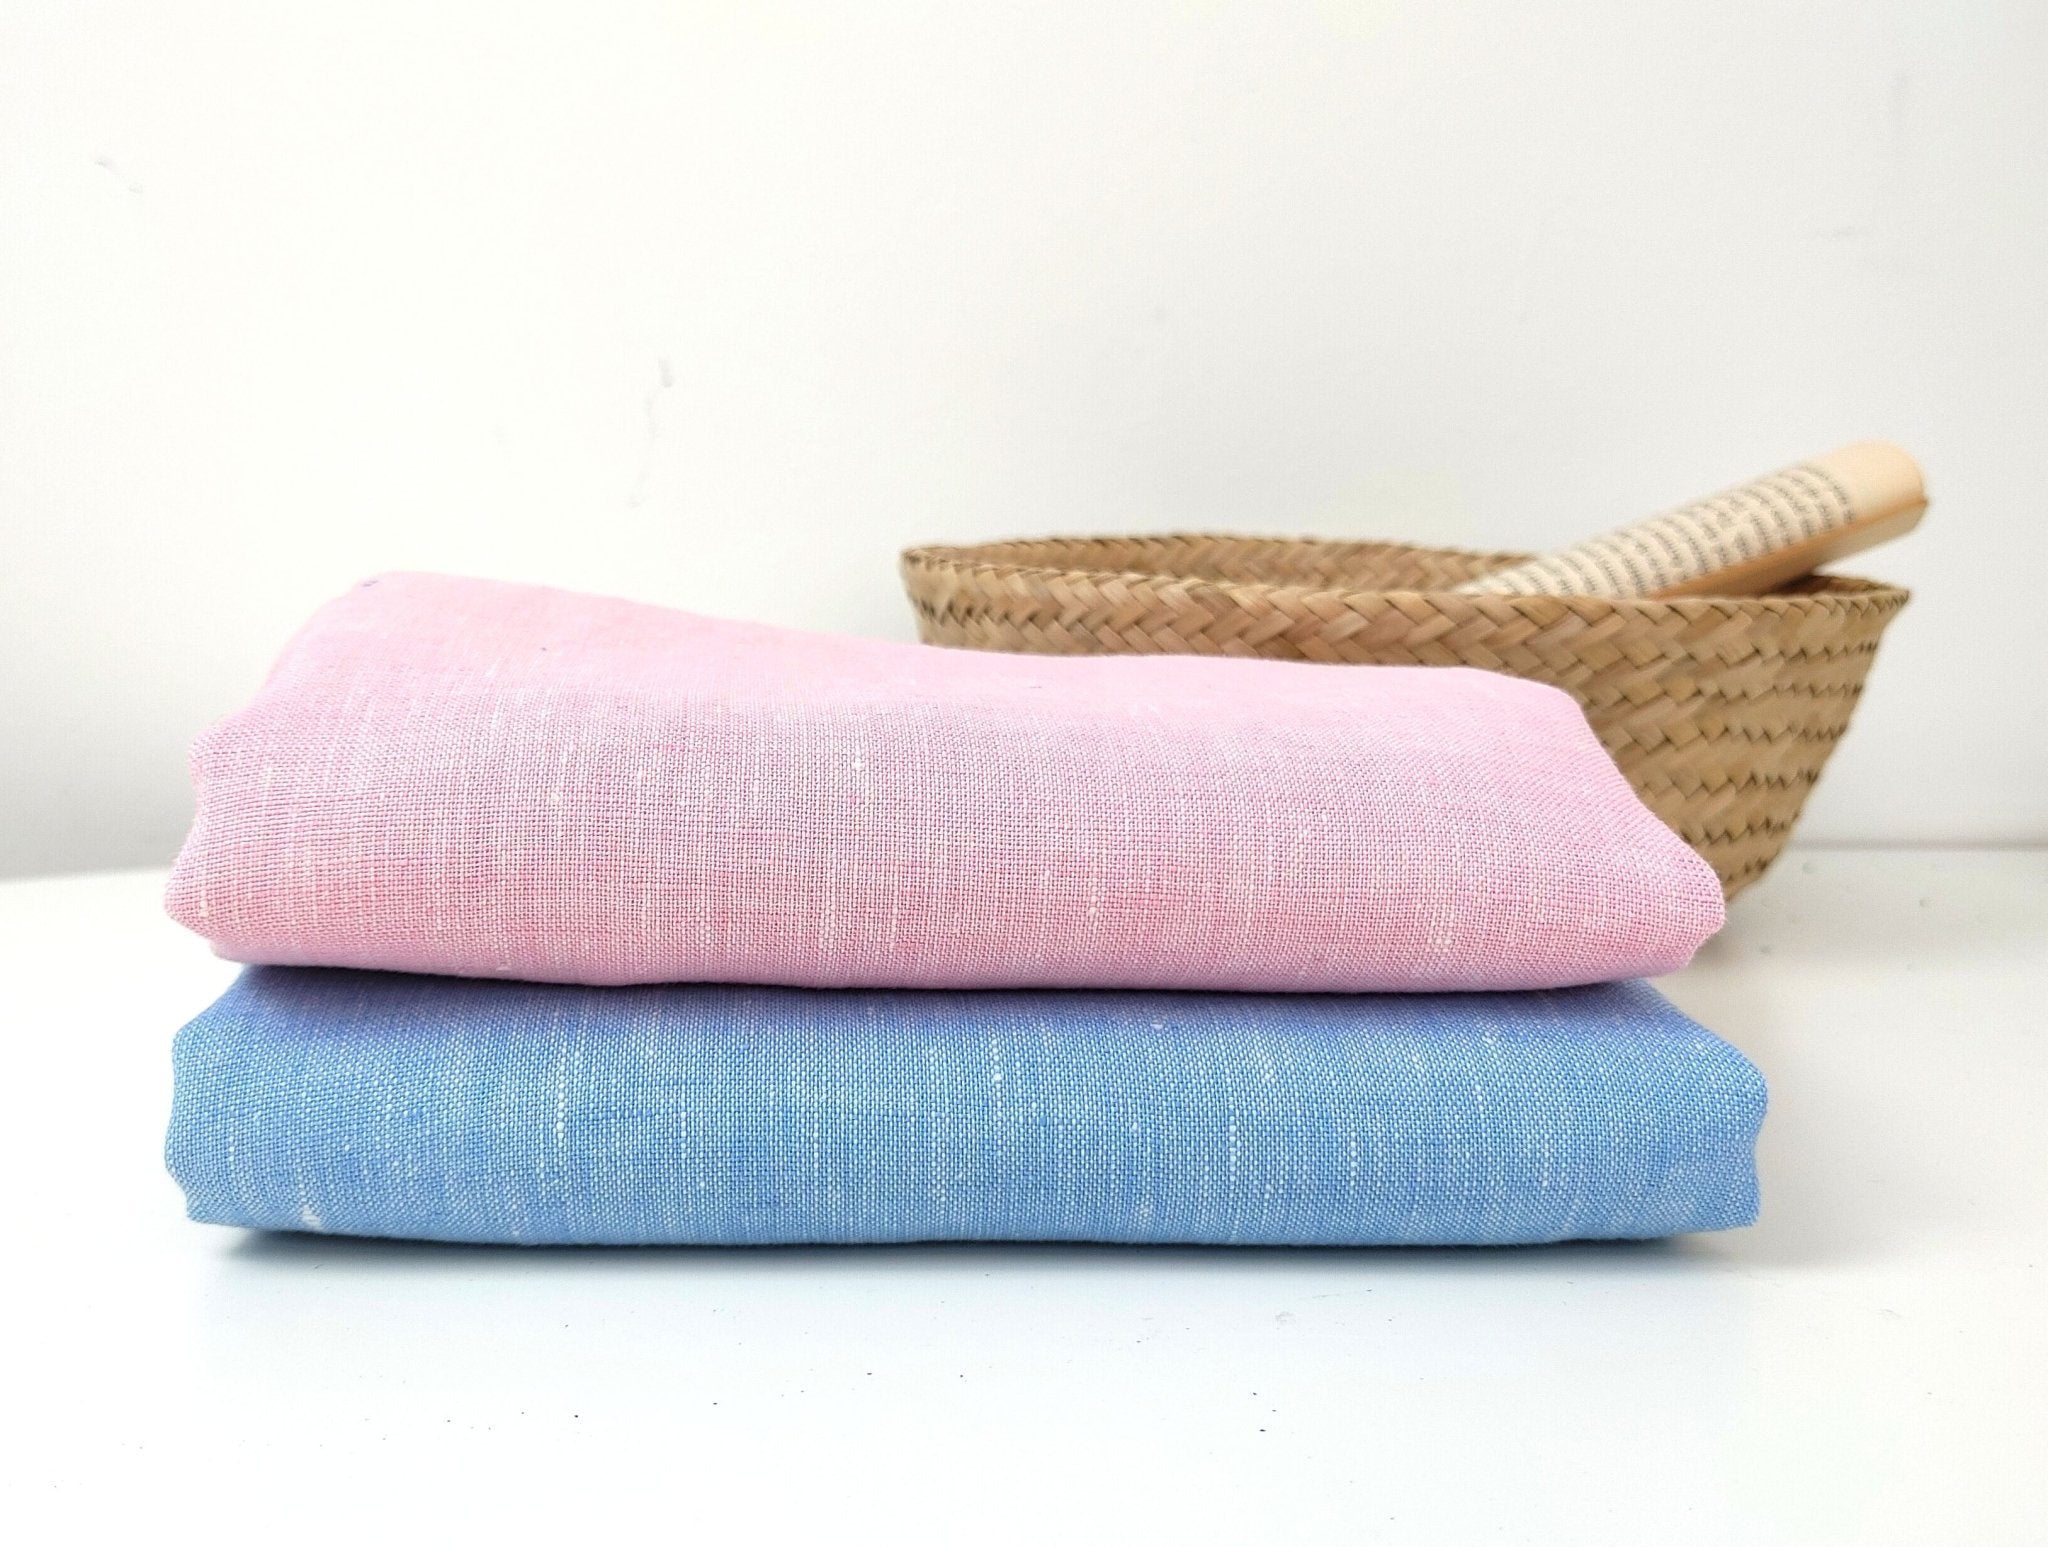 Premium 100% Linen Chambray Fabric - Medium-Light Weight, Plain Weave 7800 7801 - The Linen Lab - Pink